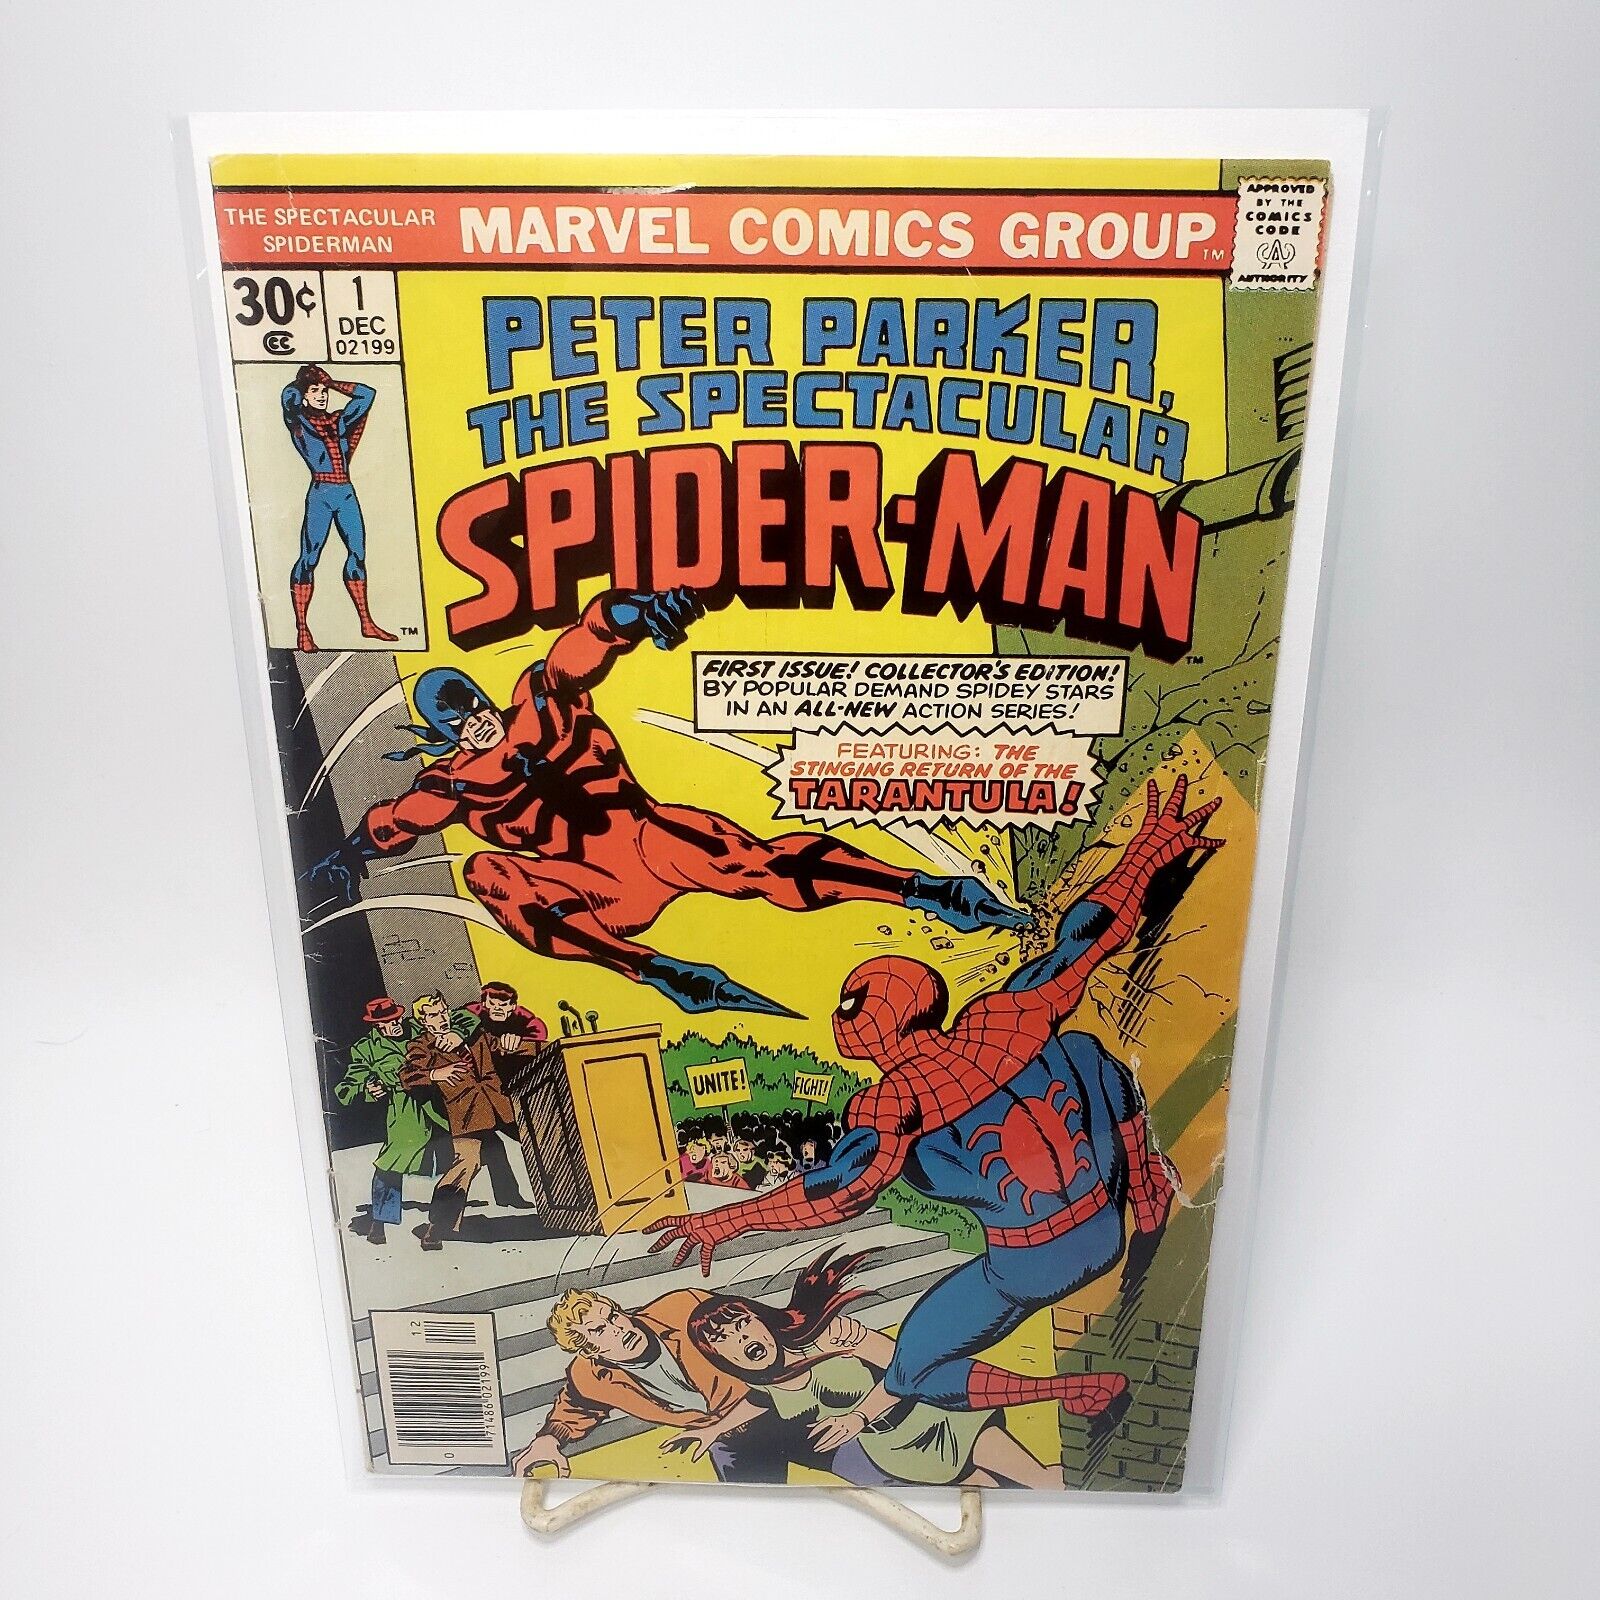 Peter Parker, The Spectacular Spider-Man #1 (1976) [Marvel Comics]